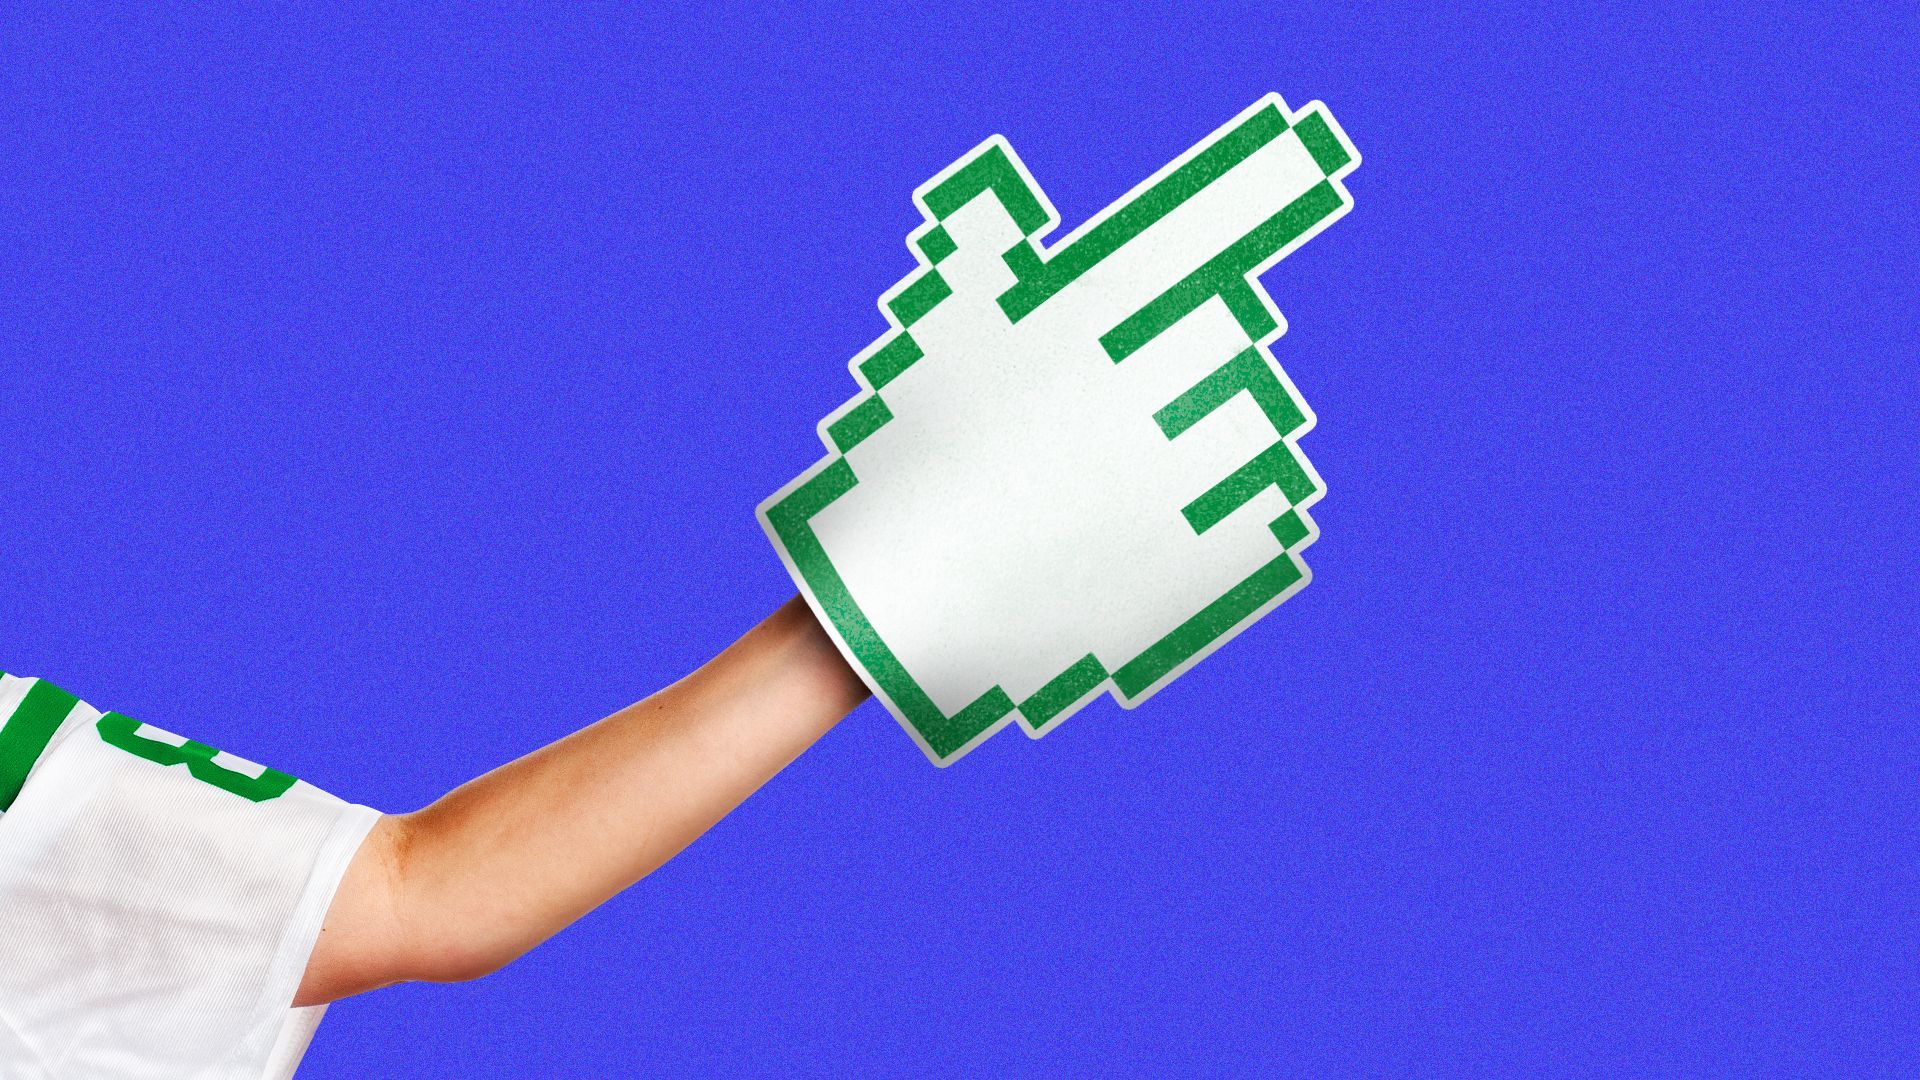 illustration of a sports fan waving a foam finger that is shaped like a computer cursor